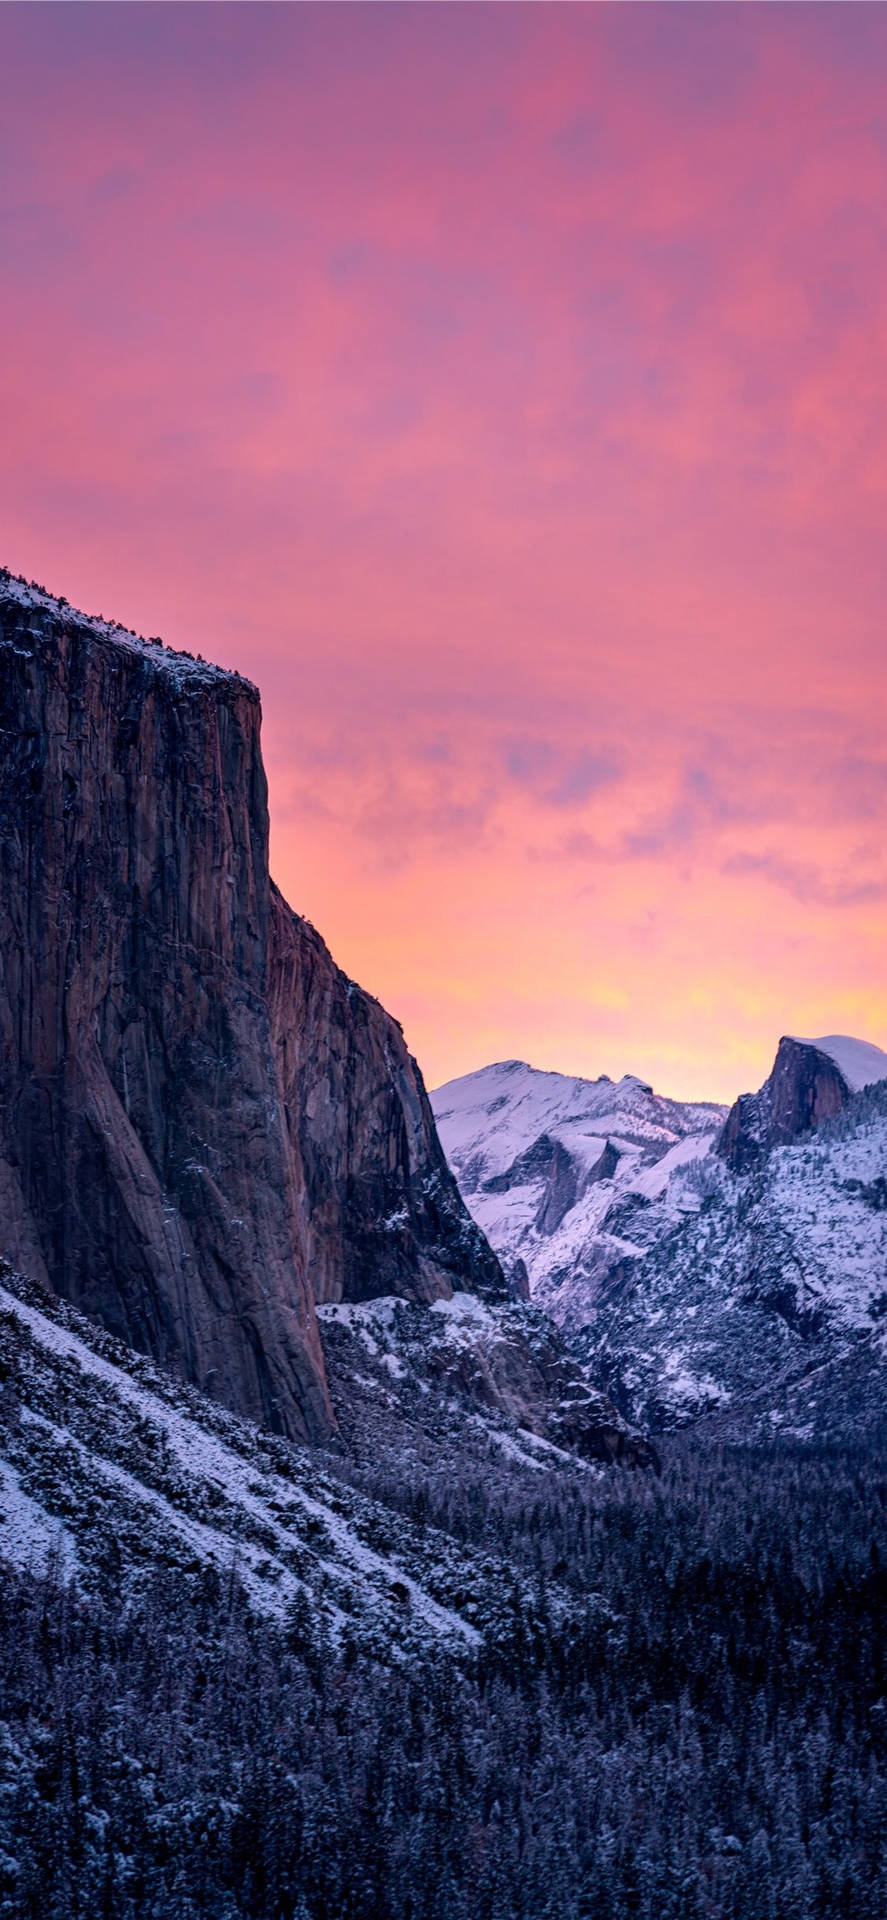 Enjoy beautiful views of Yosemite National Park on your Iphone Wallpaper